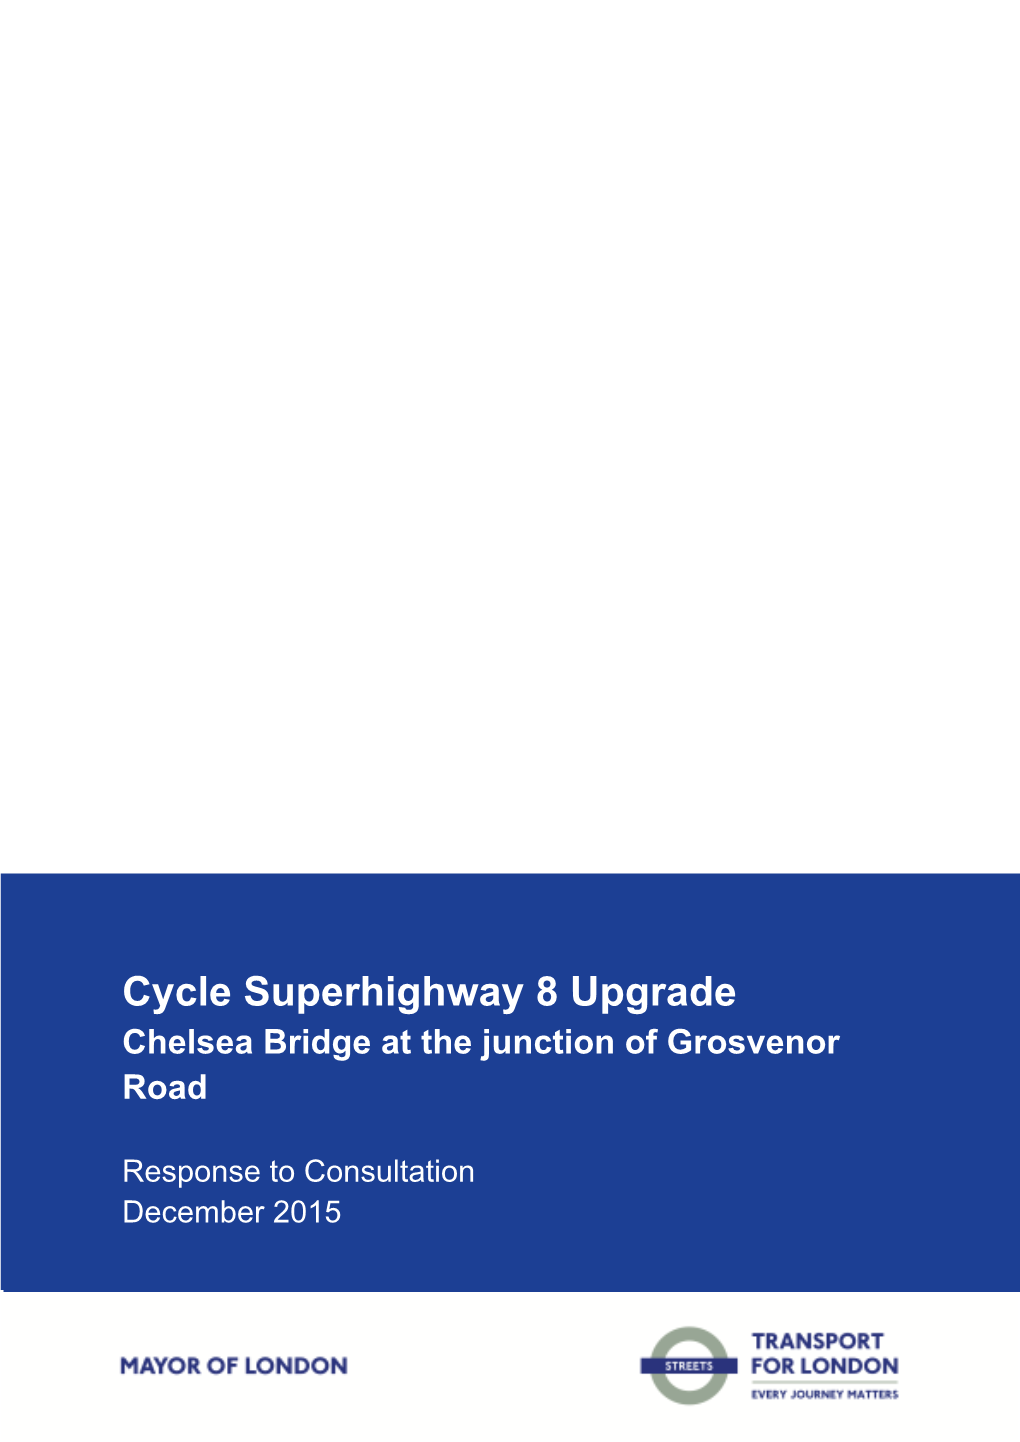 Cycle Superhighway 8 Upgrade Chelsea Bridge at the Junction of Grosvenor Road